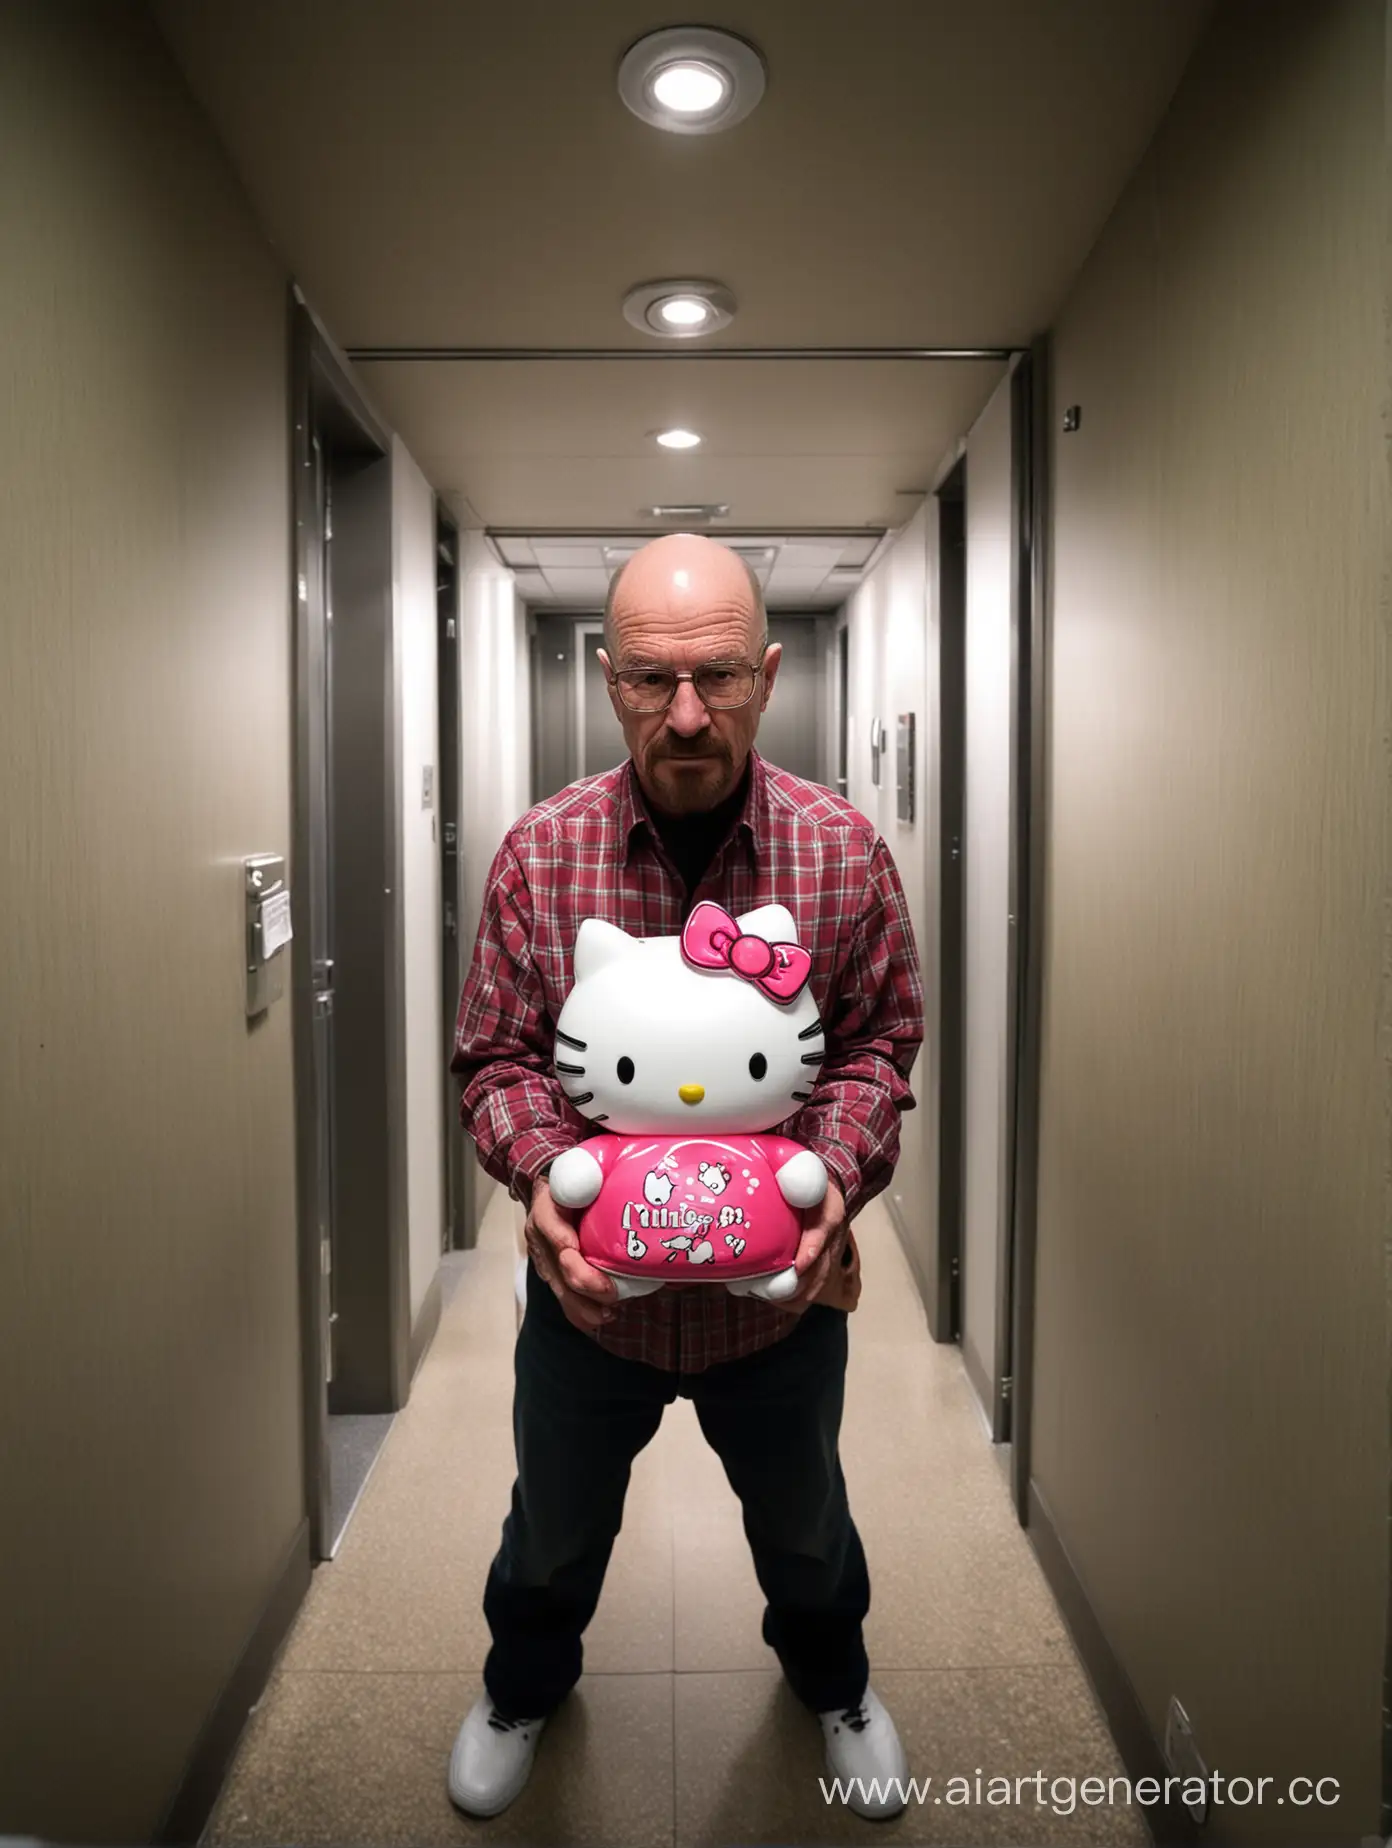 Walter-White-Holds-Hello-Kitty-Toy-in-Fish-Eye-Elevator-Scene